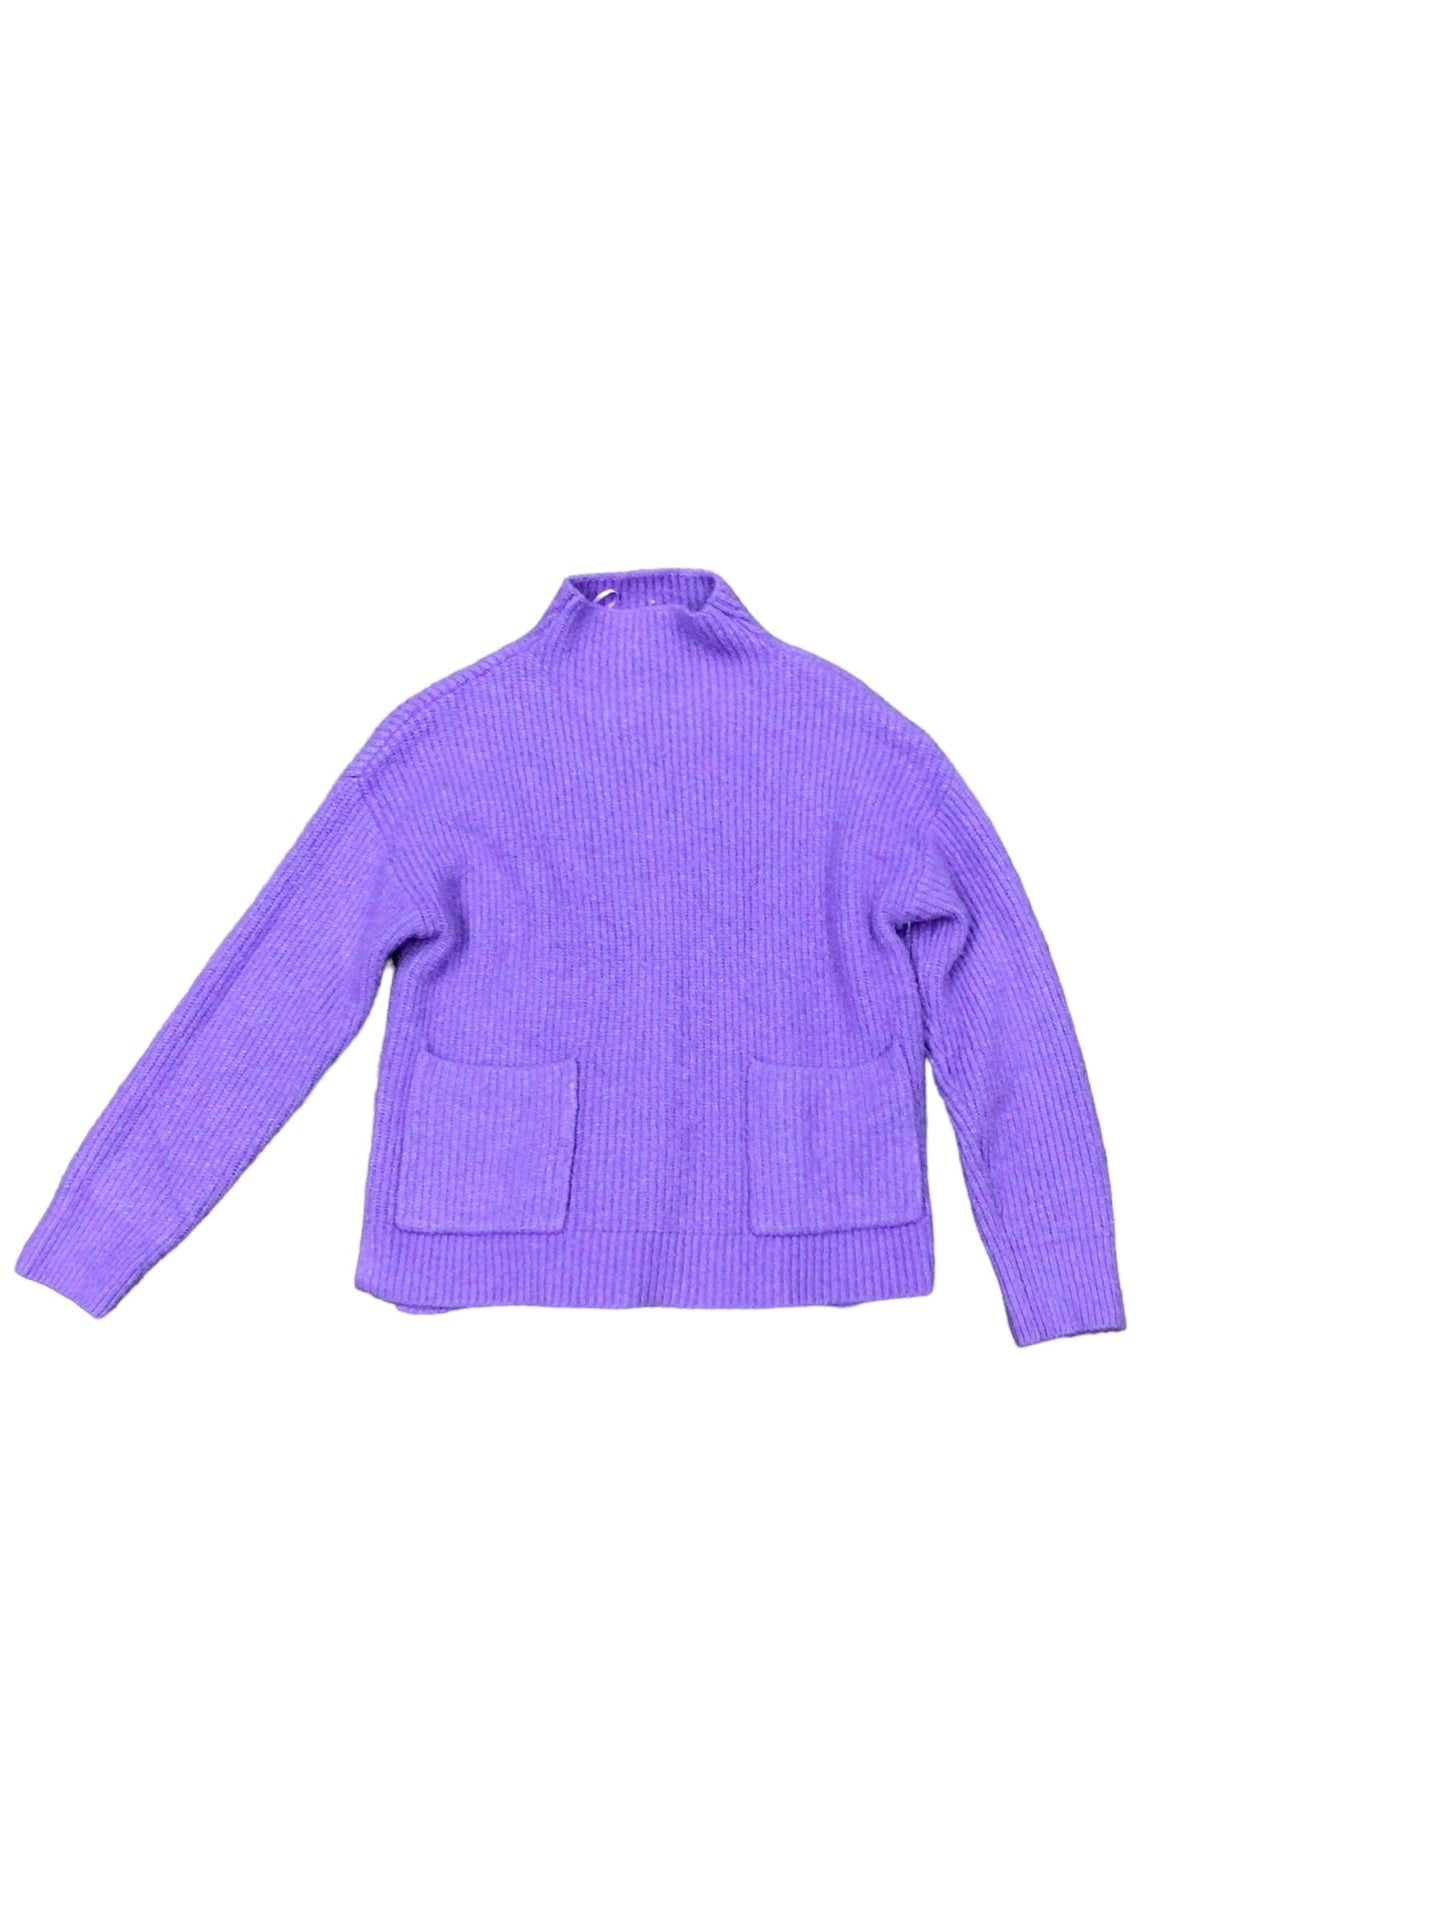 Sweater By Melloday  Size: M